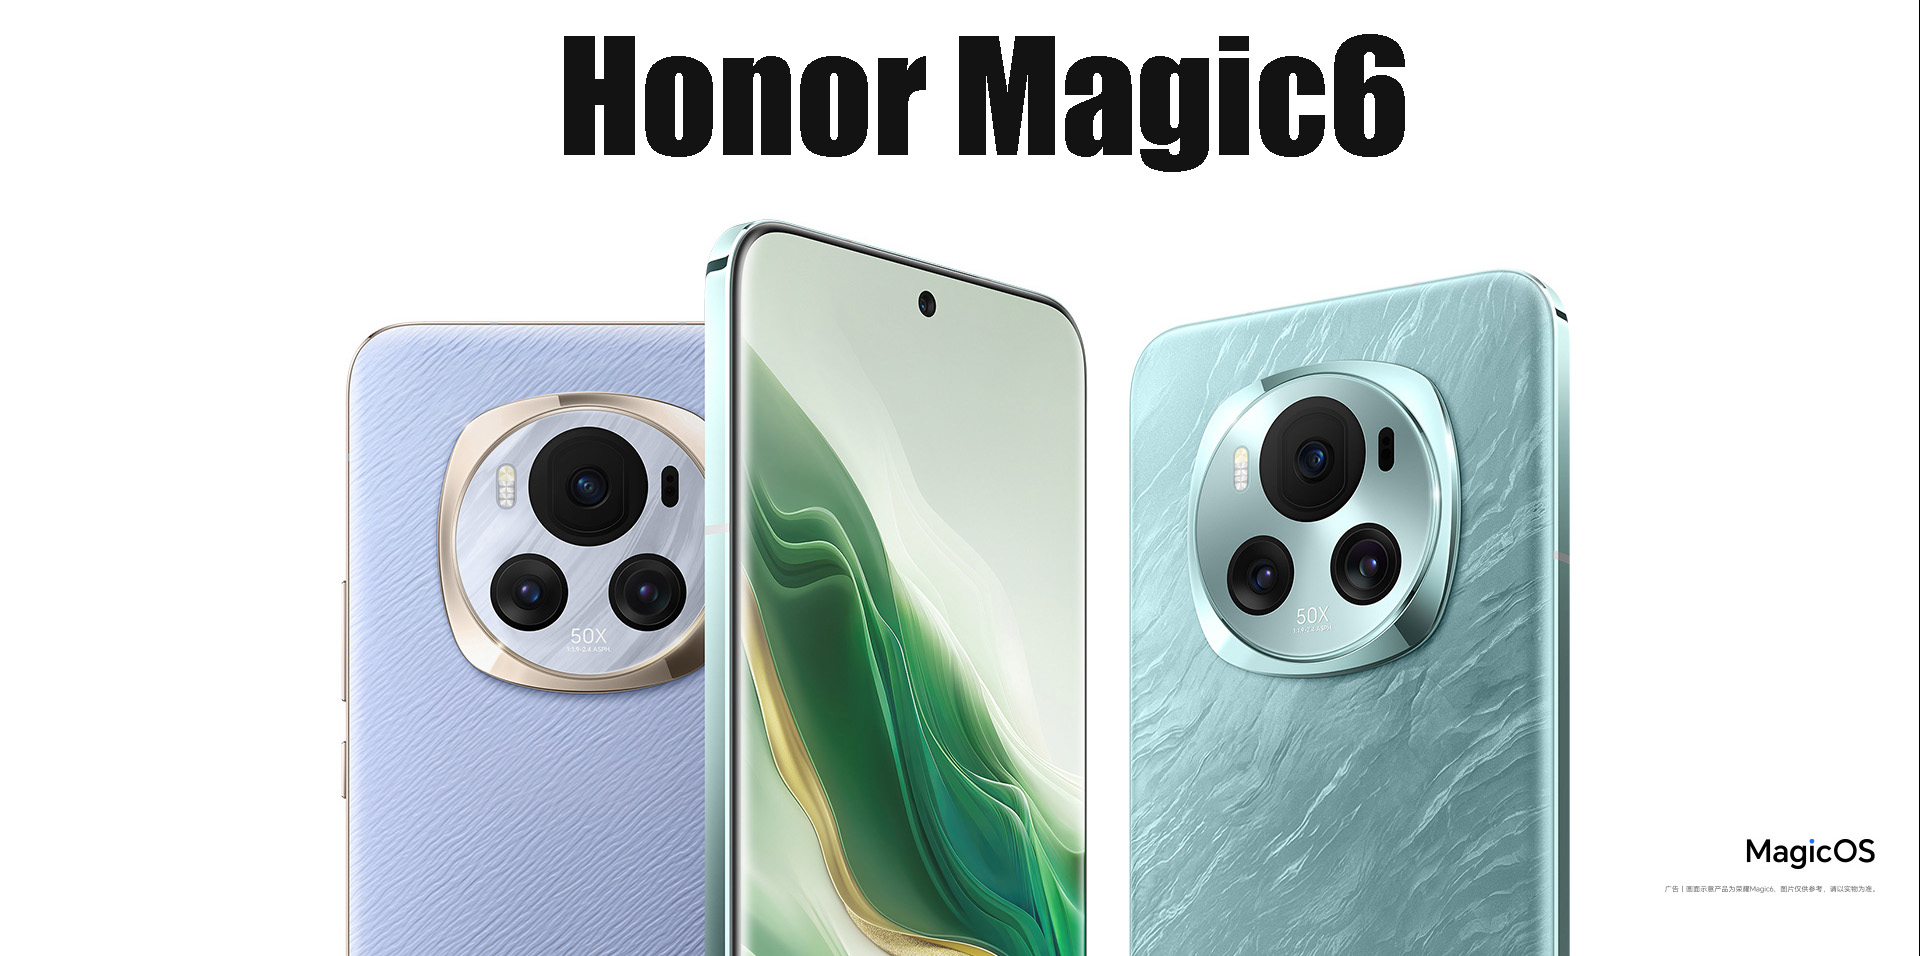 Honor Magic6 Pro